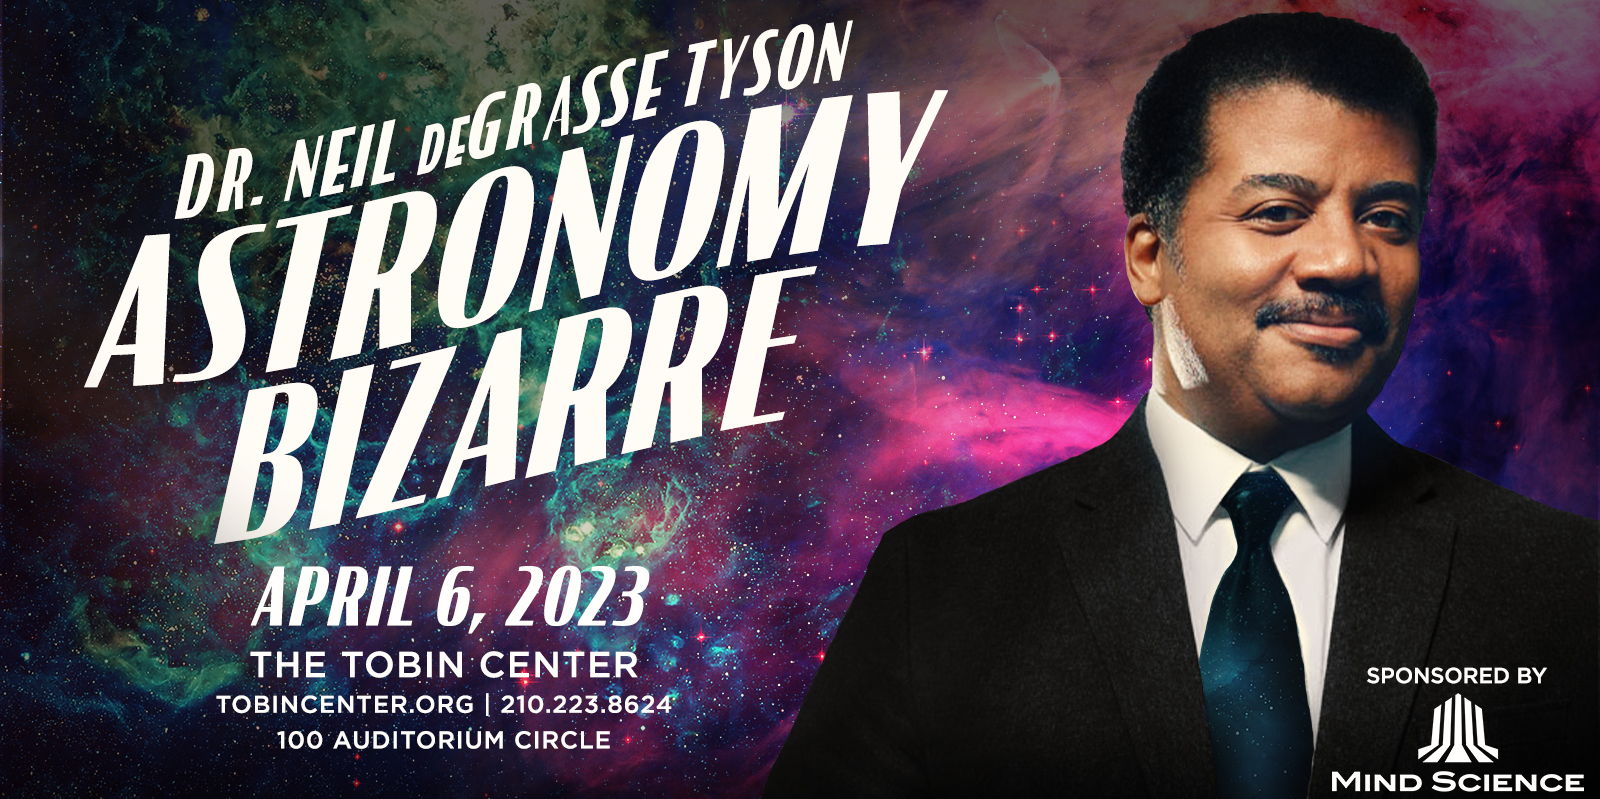 Dr. Neil deGrasse Tyson promotional image